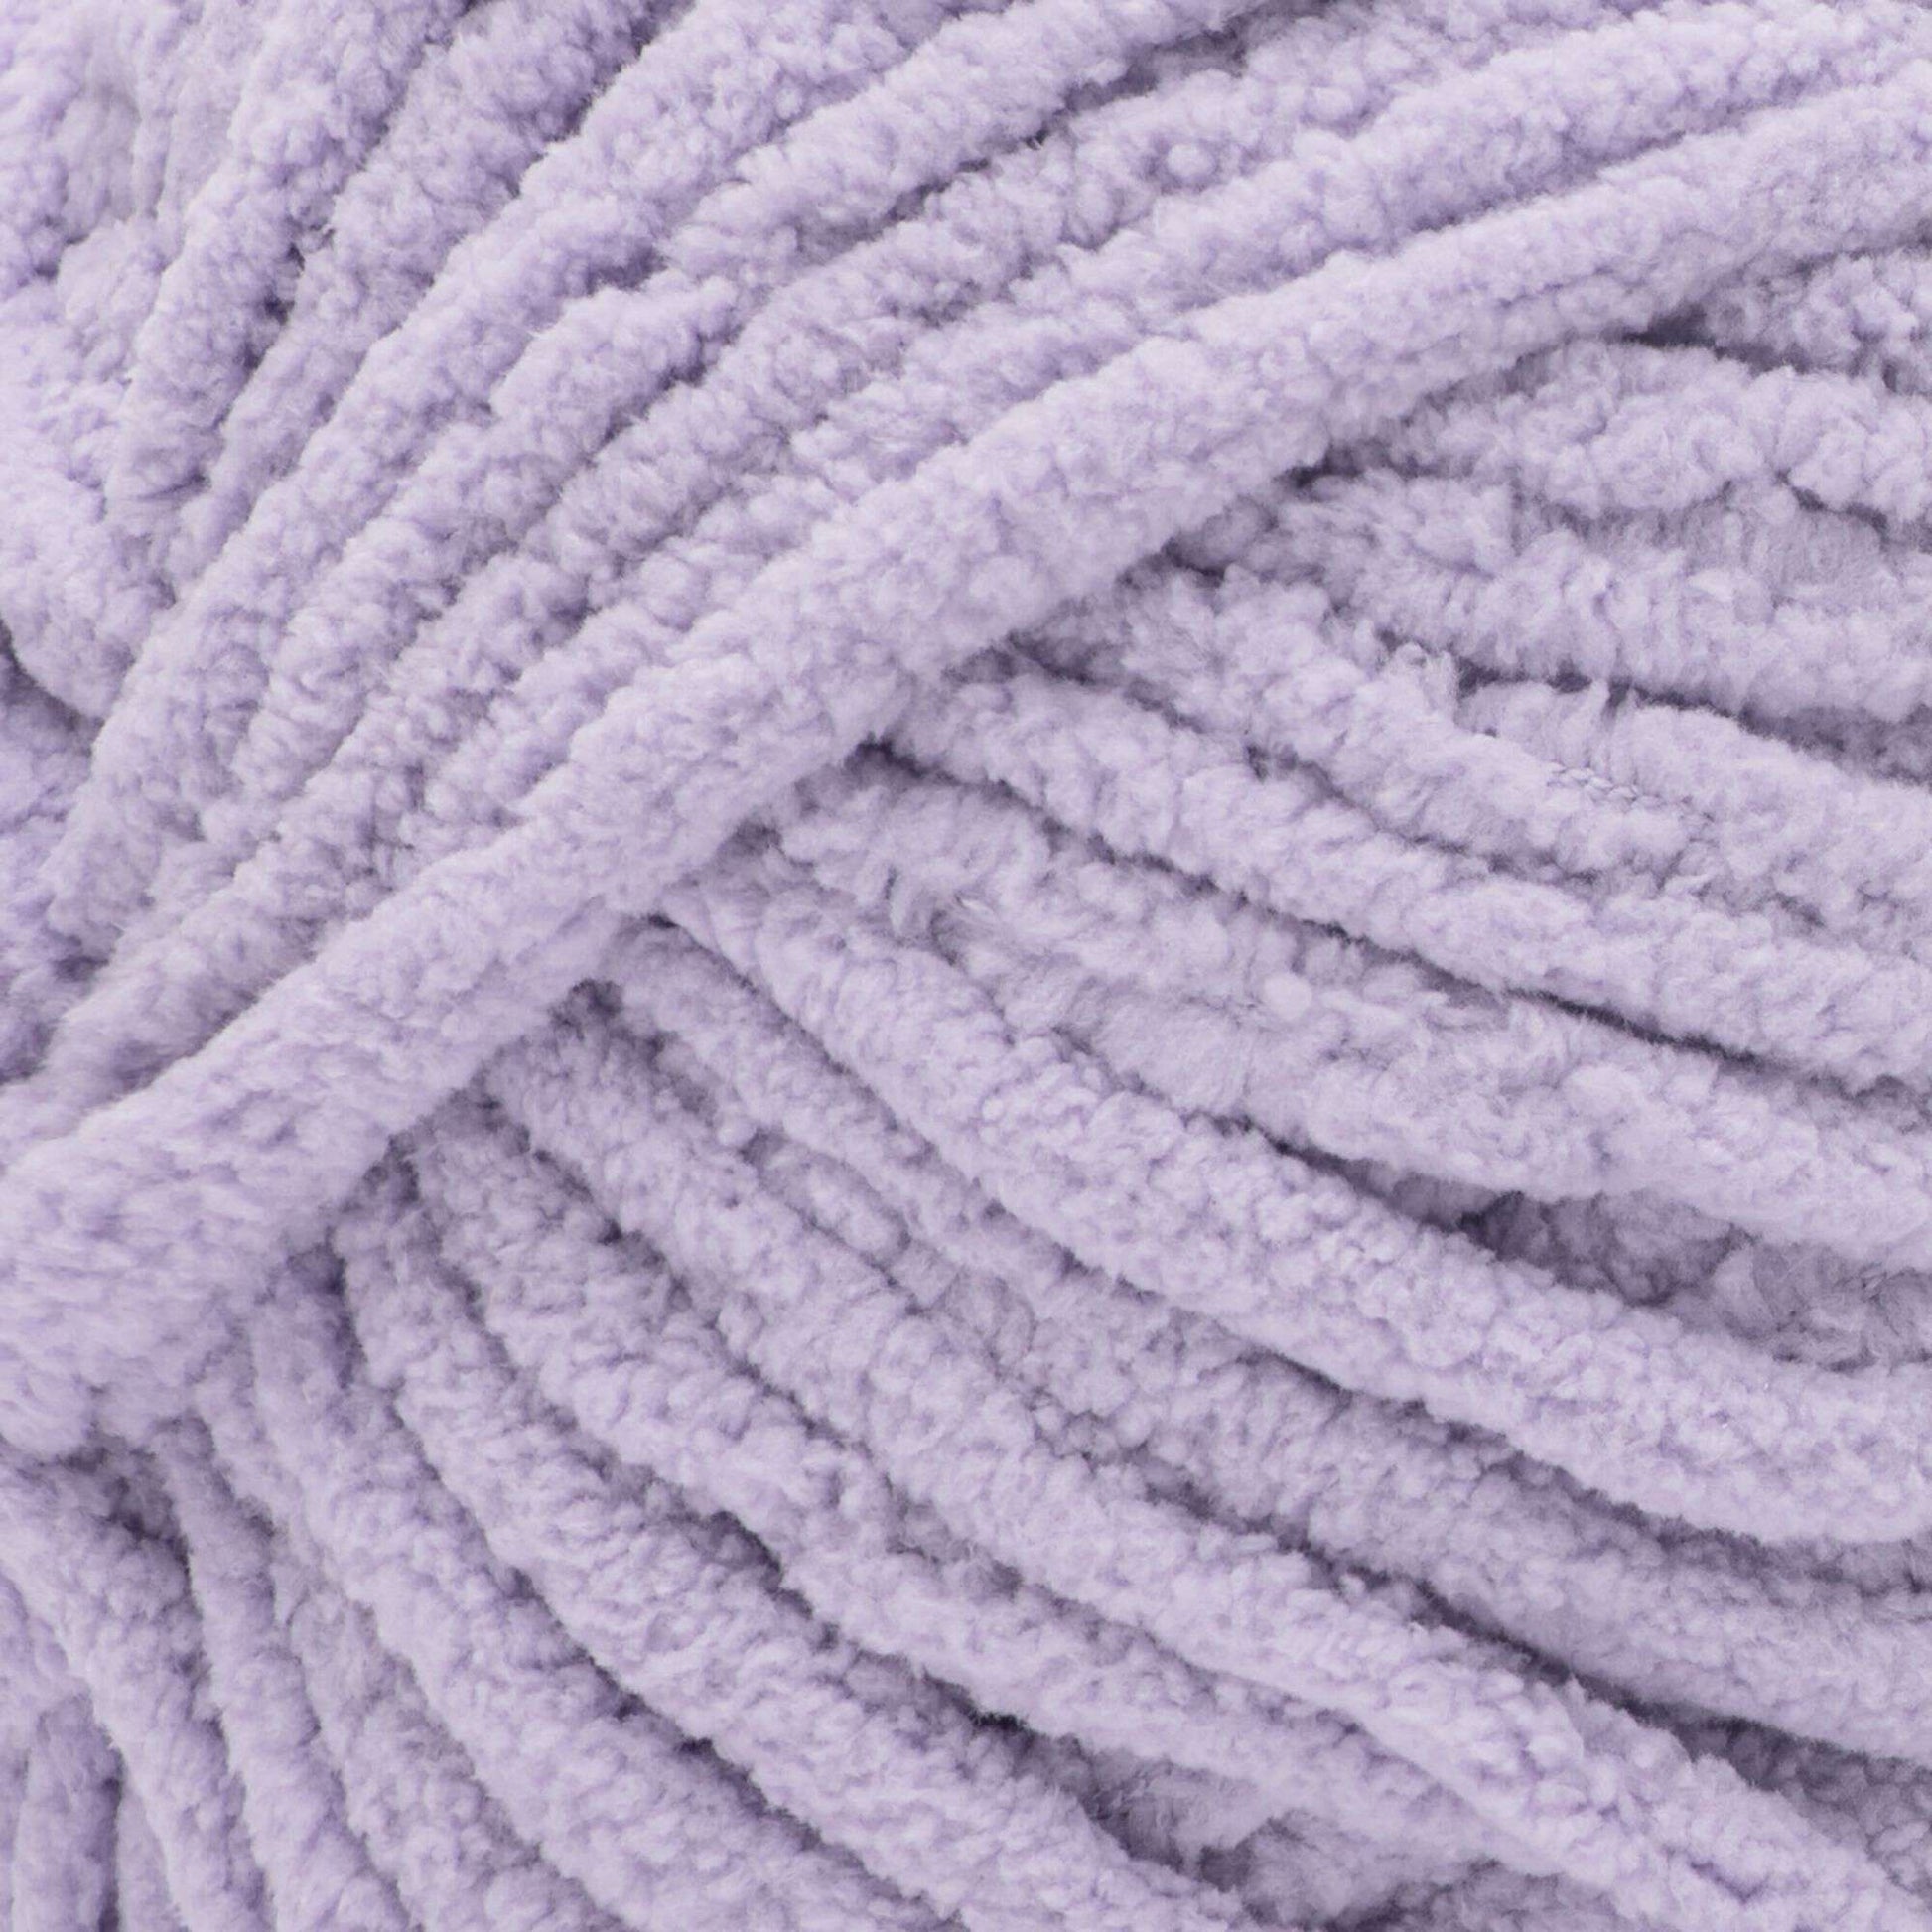 Bernat Blanket Olive Yarn - 2 Pack of 300g/10.5oz - Polyester - 6